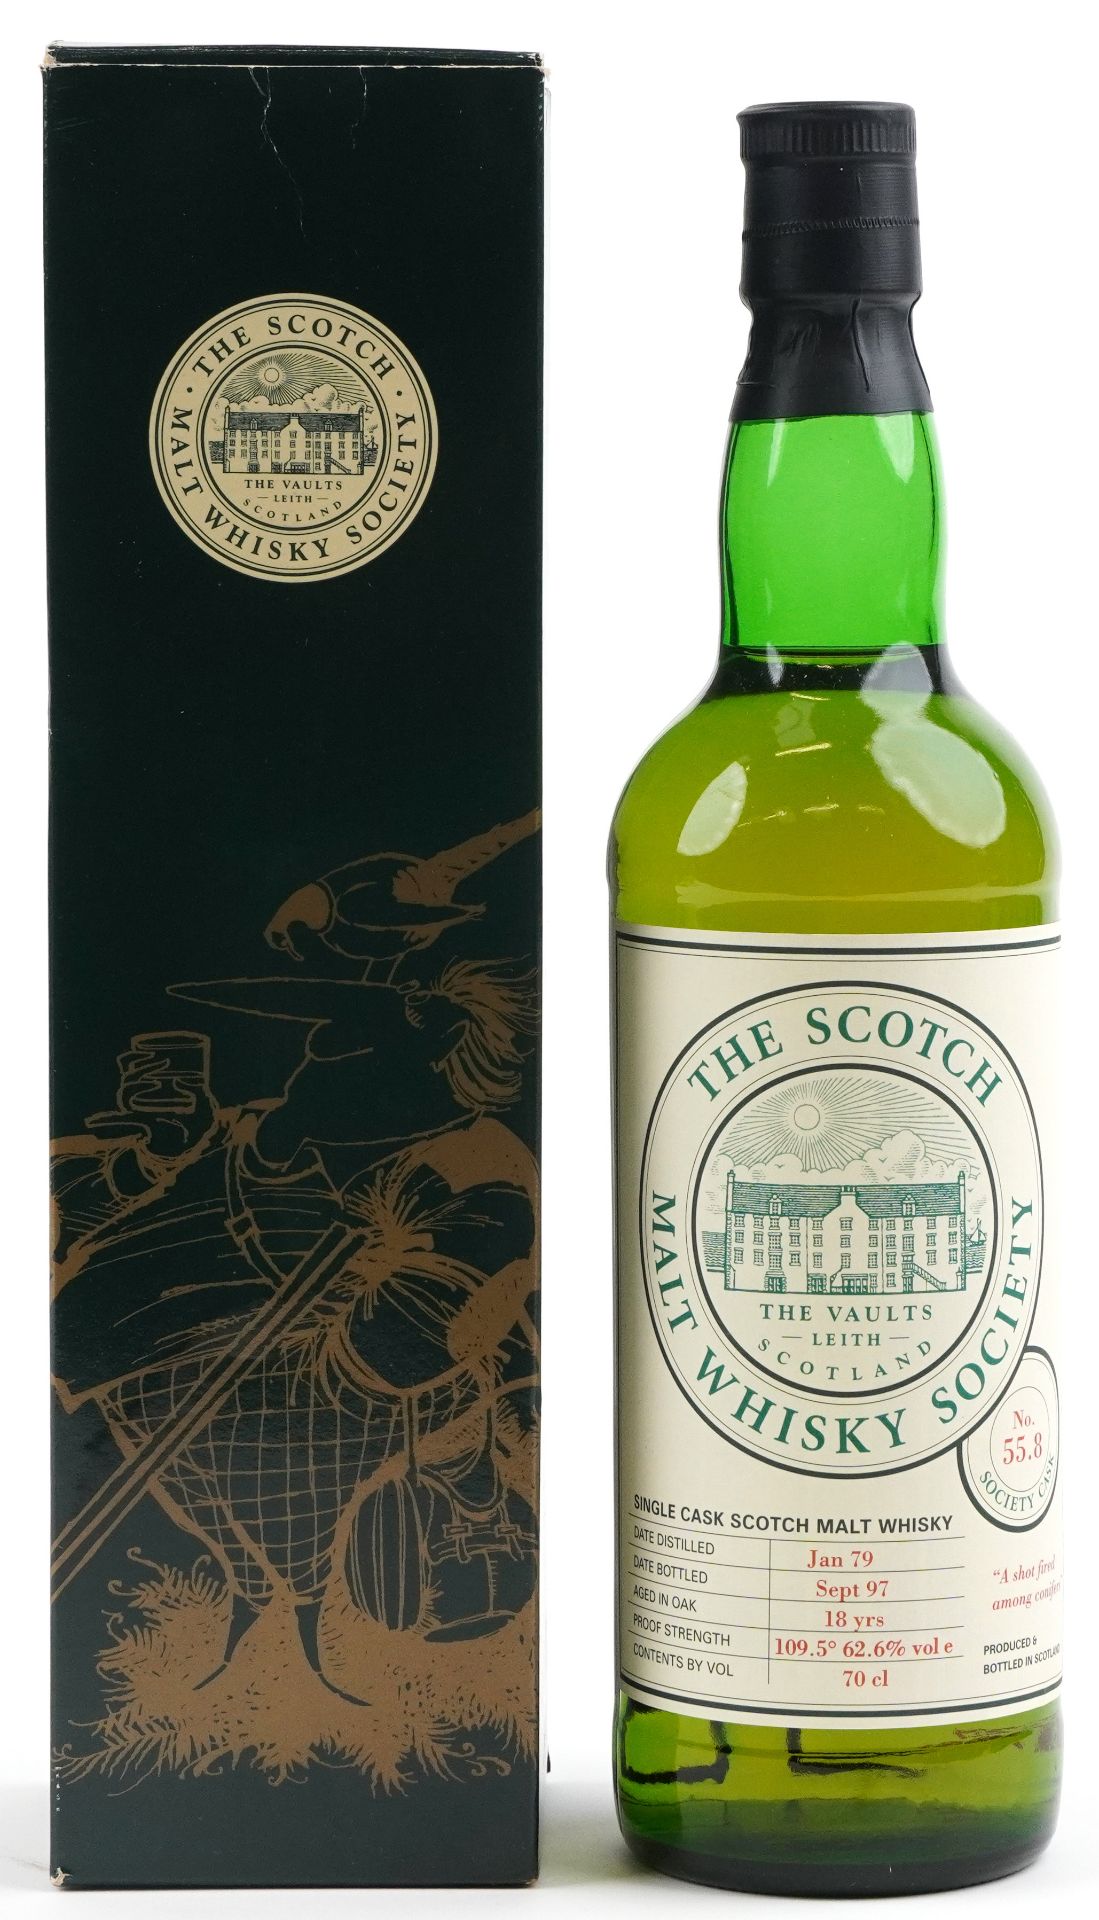 Bottle of Scotch Malt Whisky Society Single Cask 18 years old whisky with box, Society cask no 55.8,